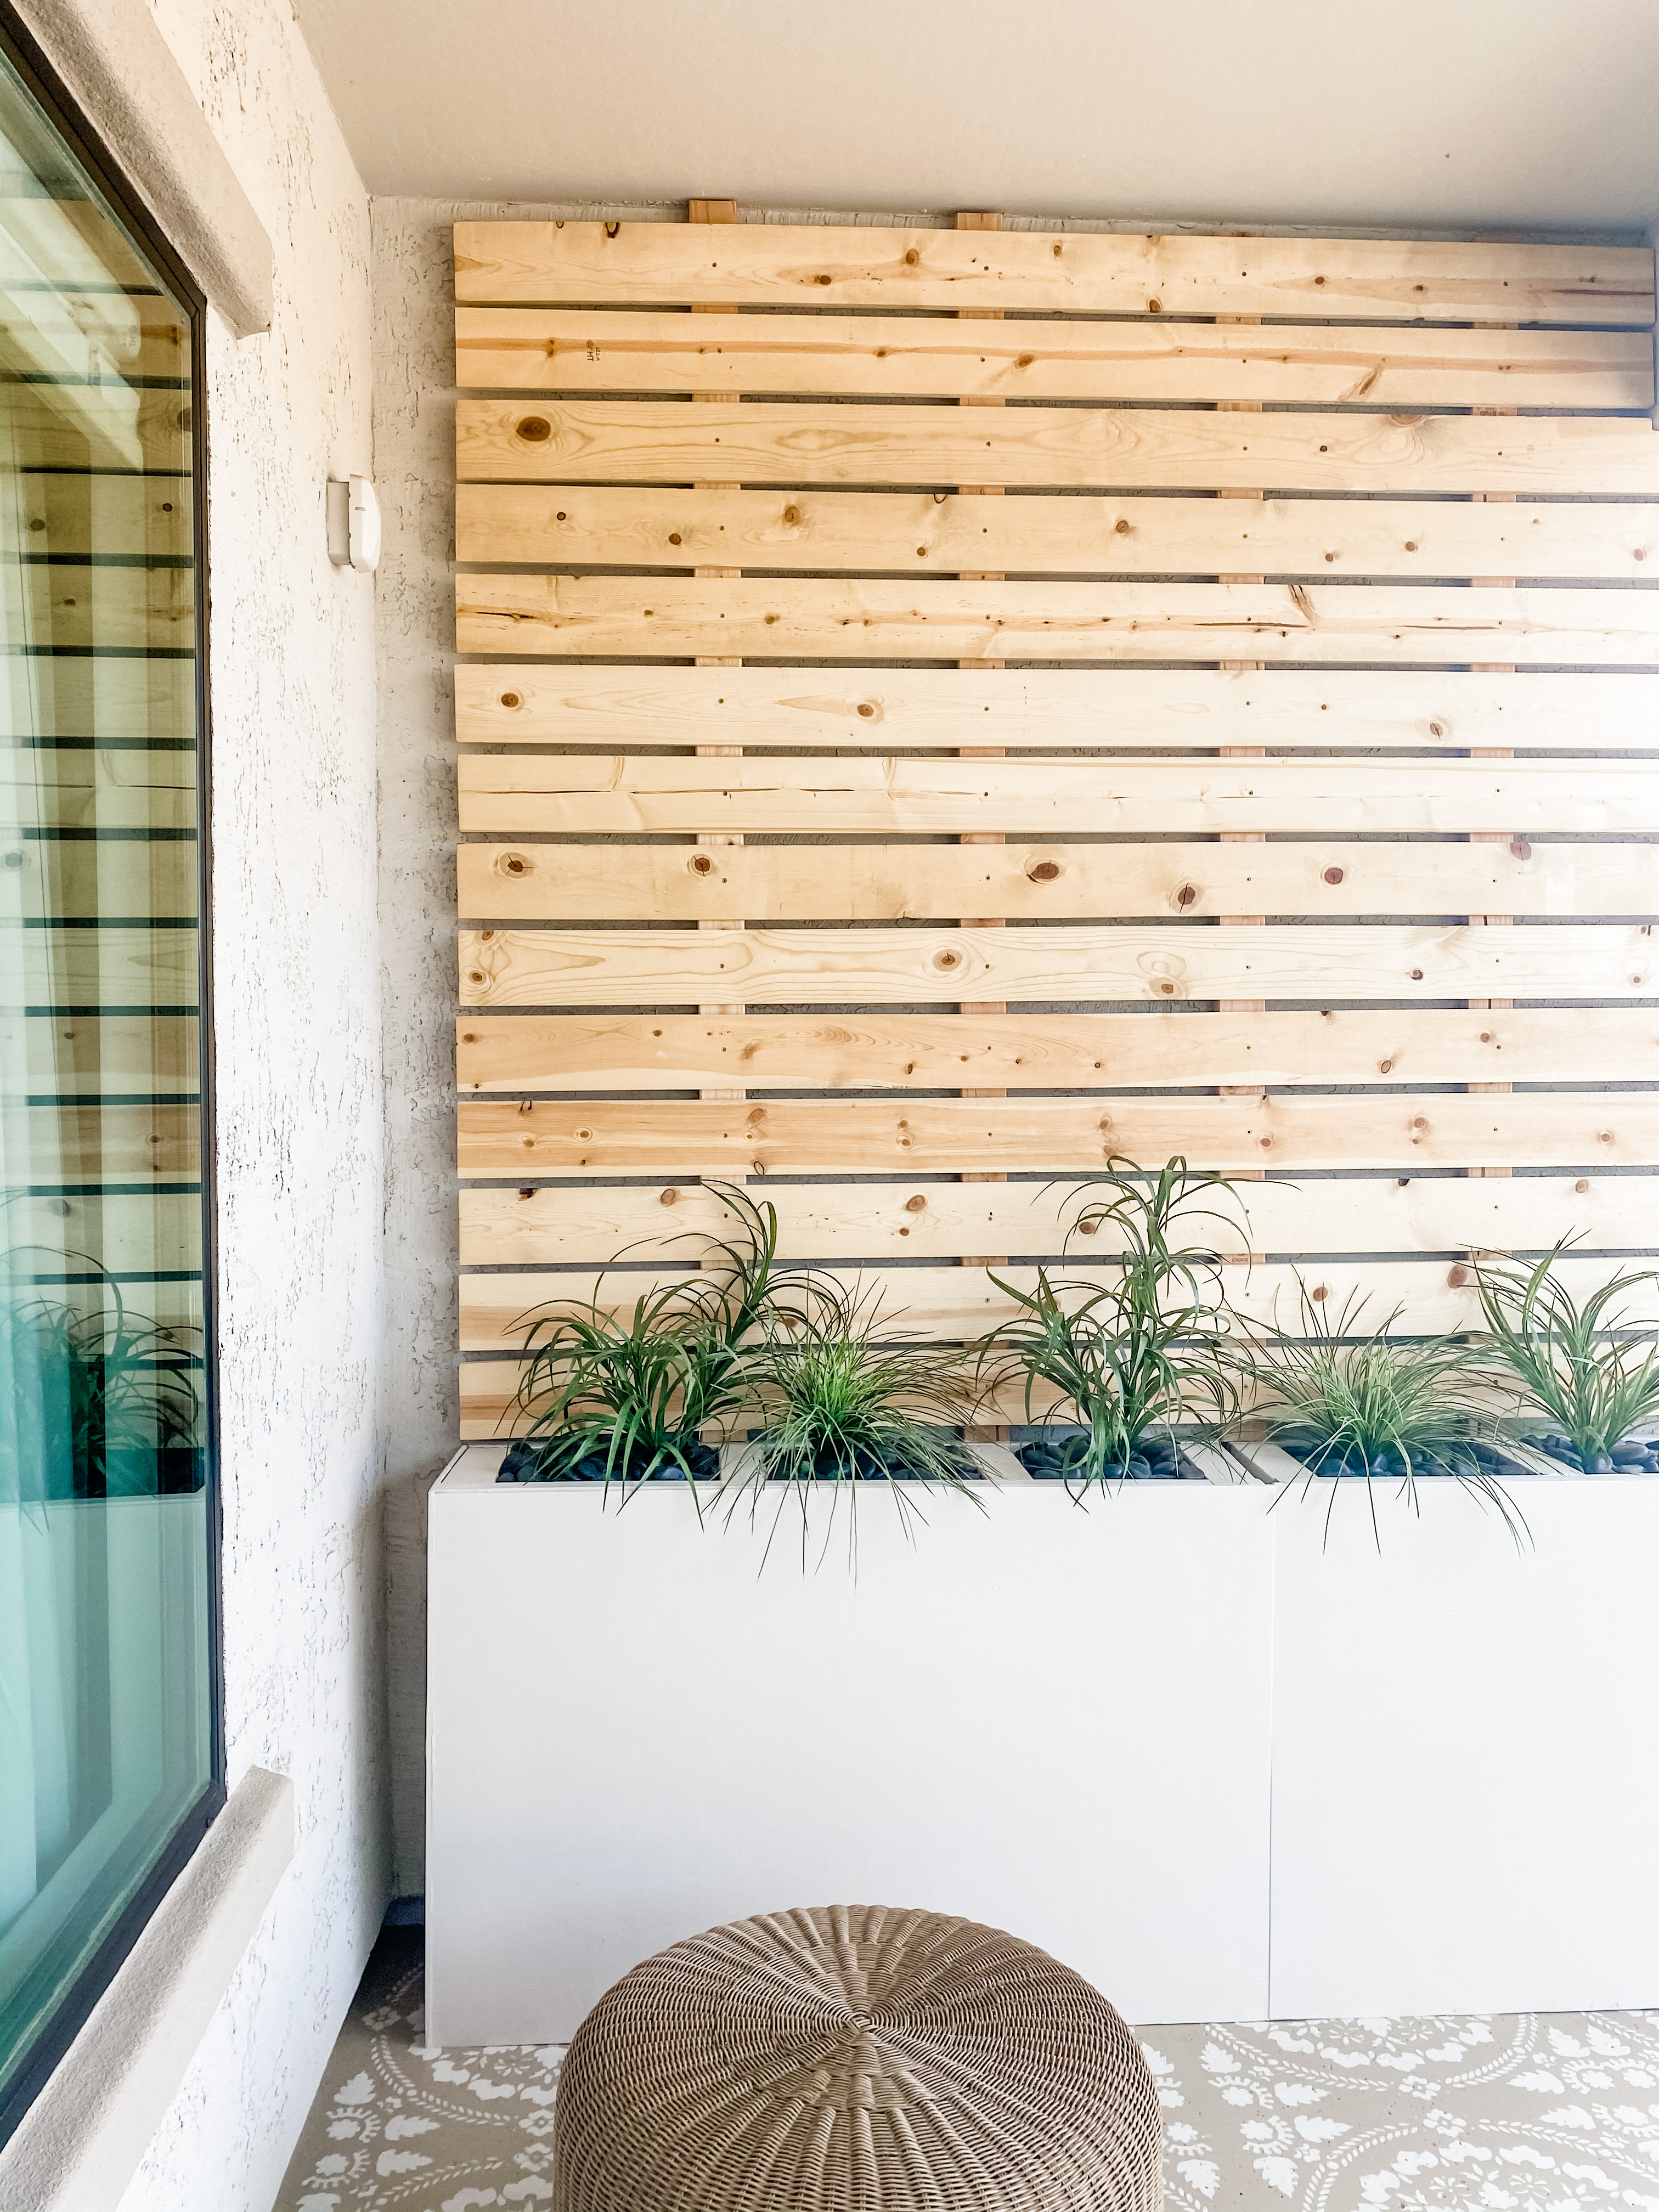 planter box alongside a wooden wall